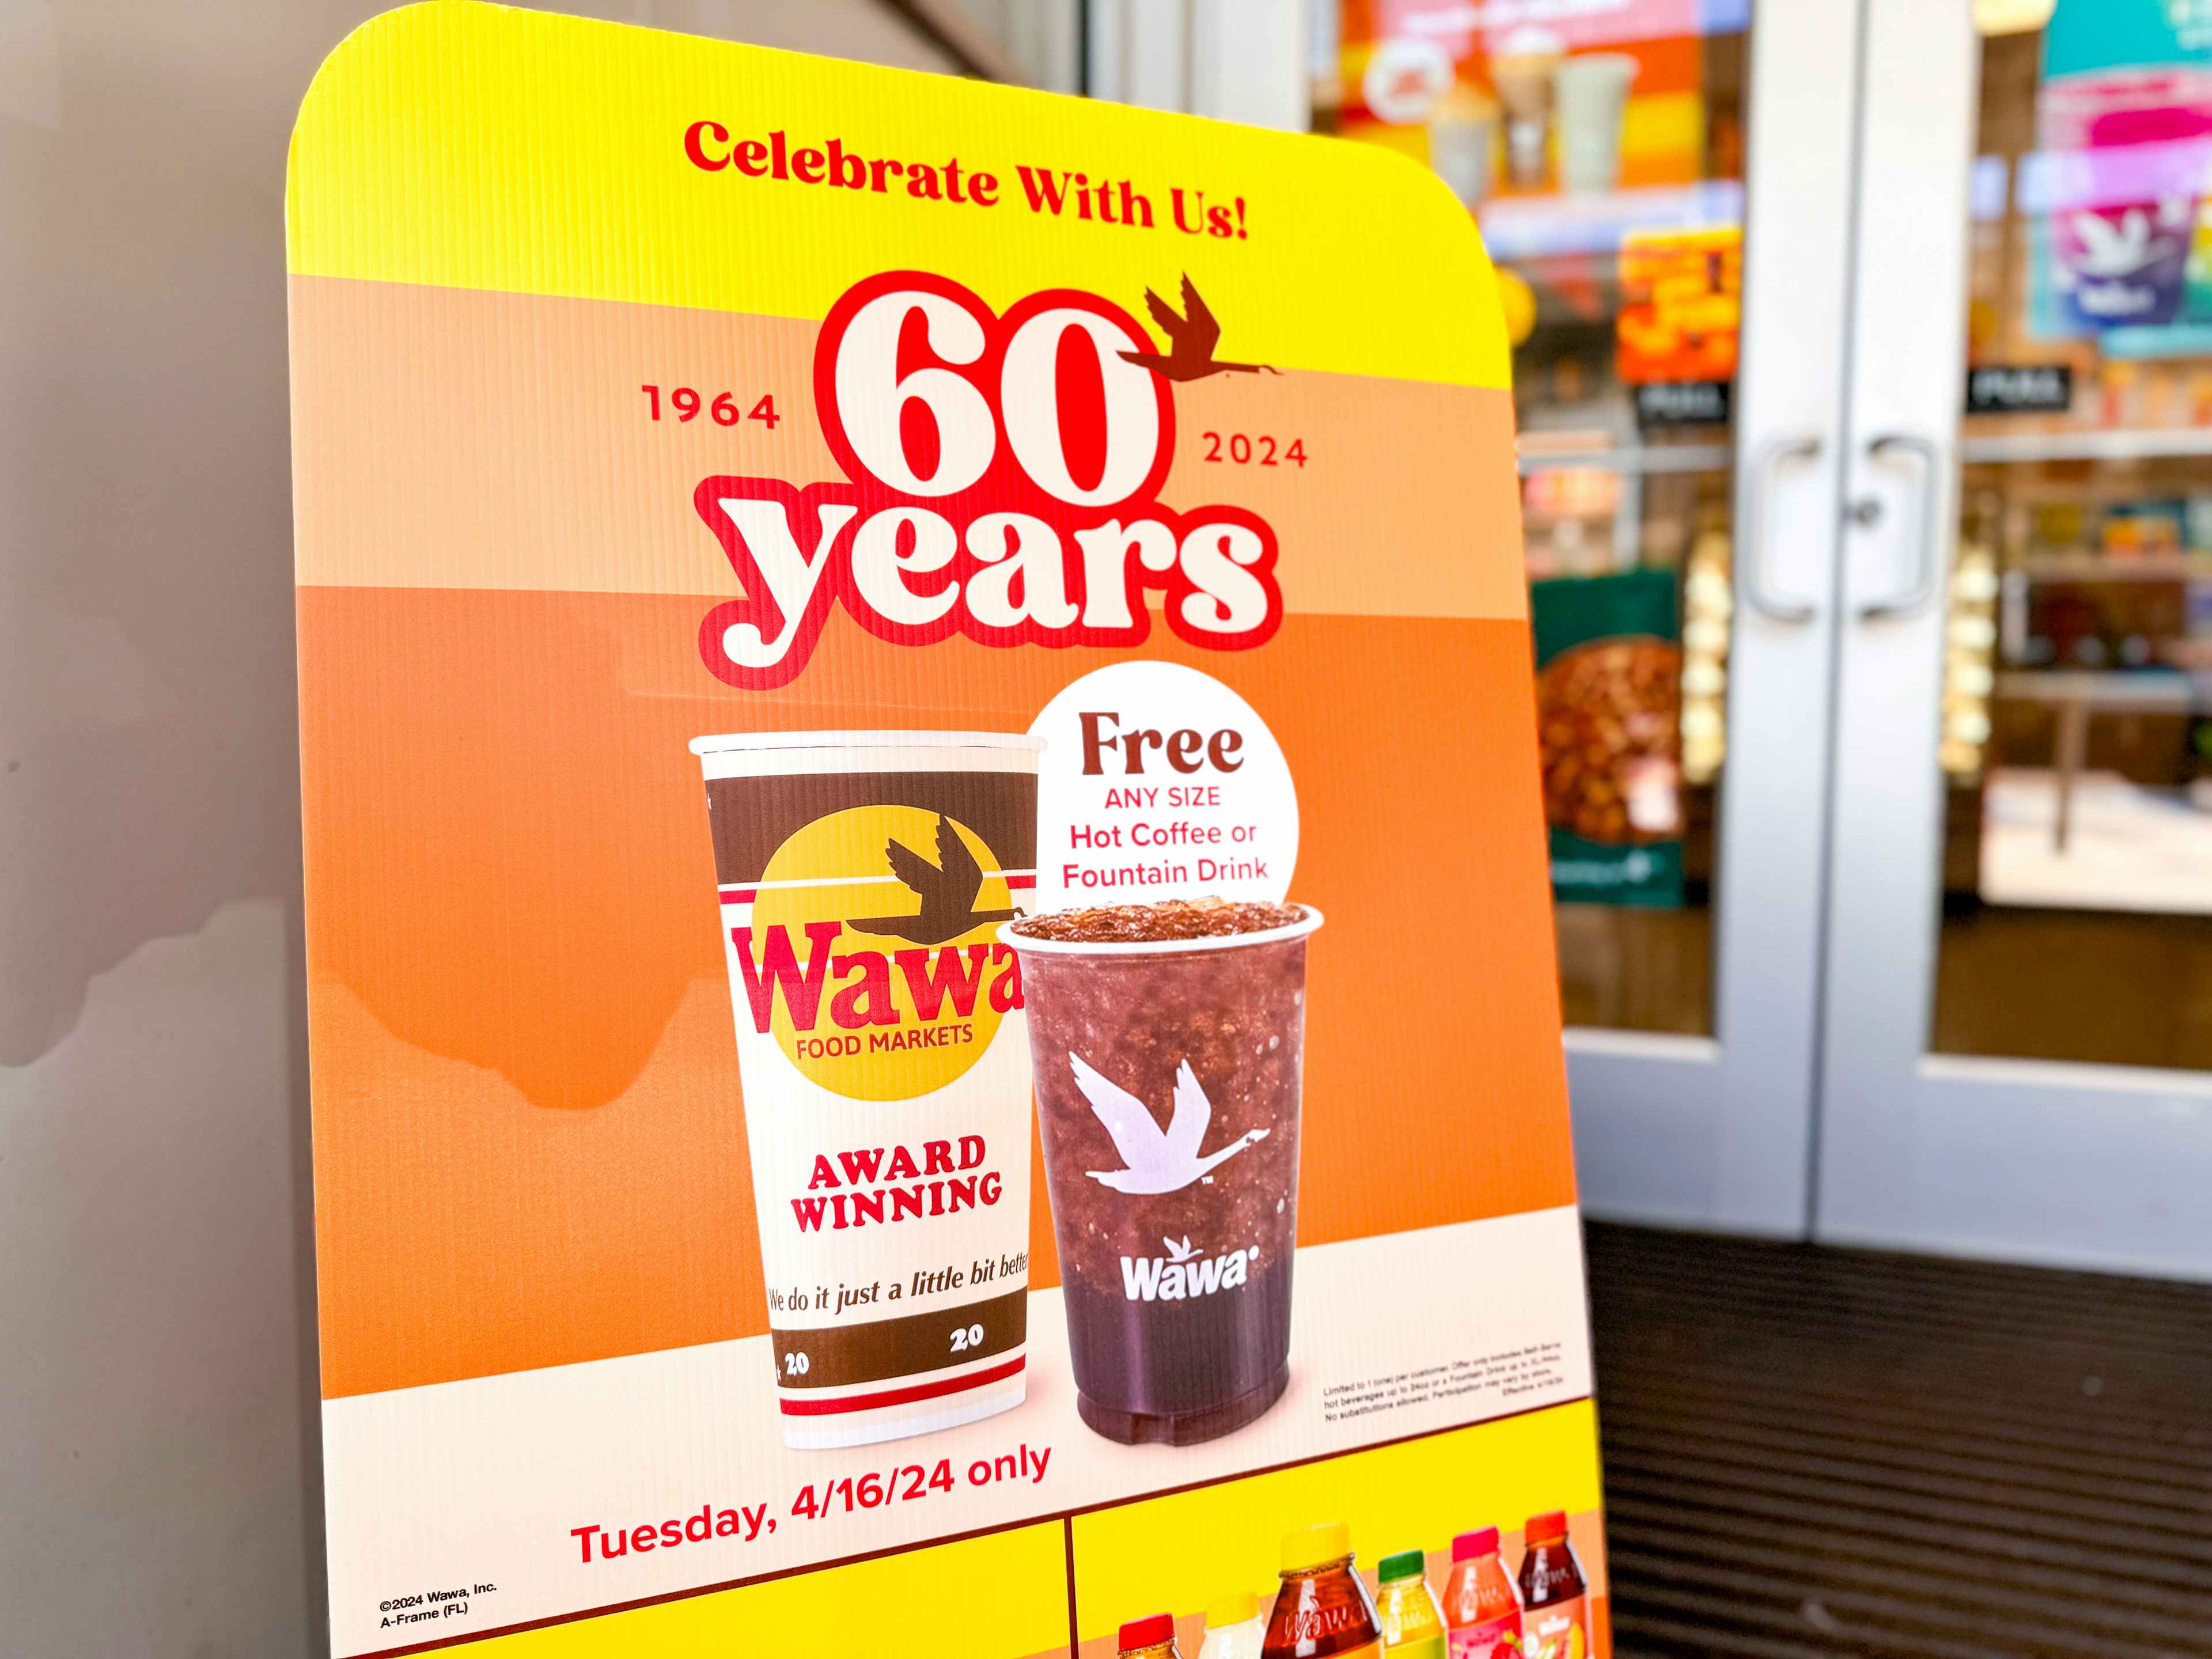 wawa-day-2024-60-year-anniversary-free-coffee-fountain-drinks-7